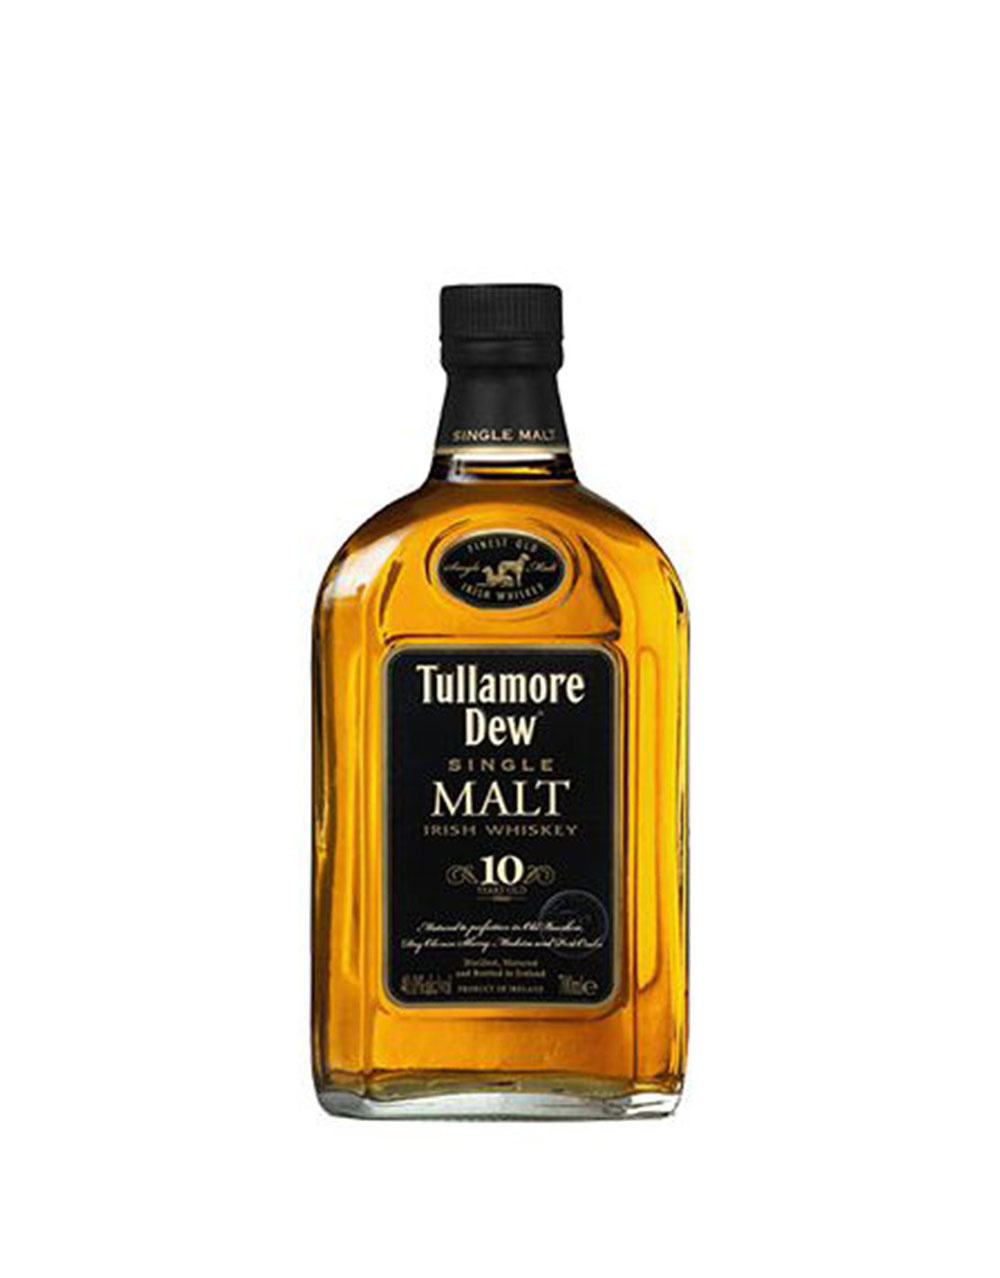 Tullamore DEW 10 Year Old Single Malt Irish Whiskey